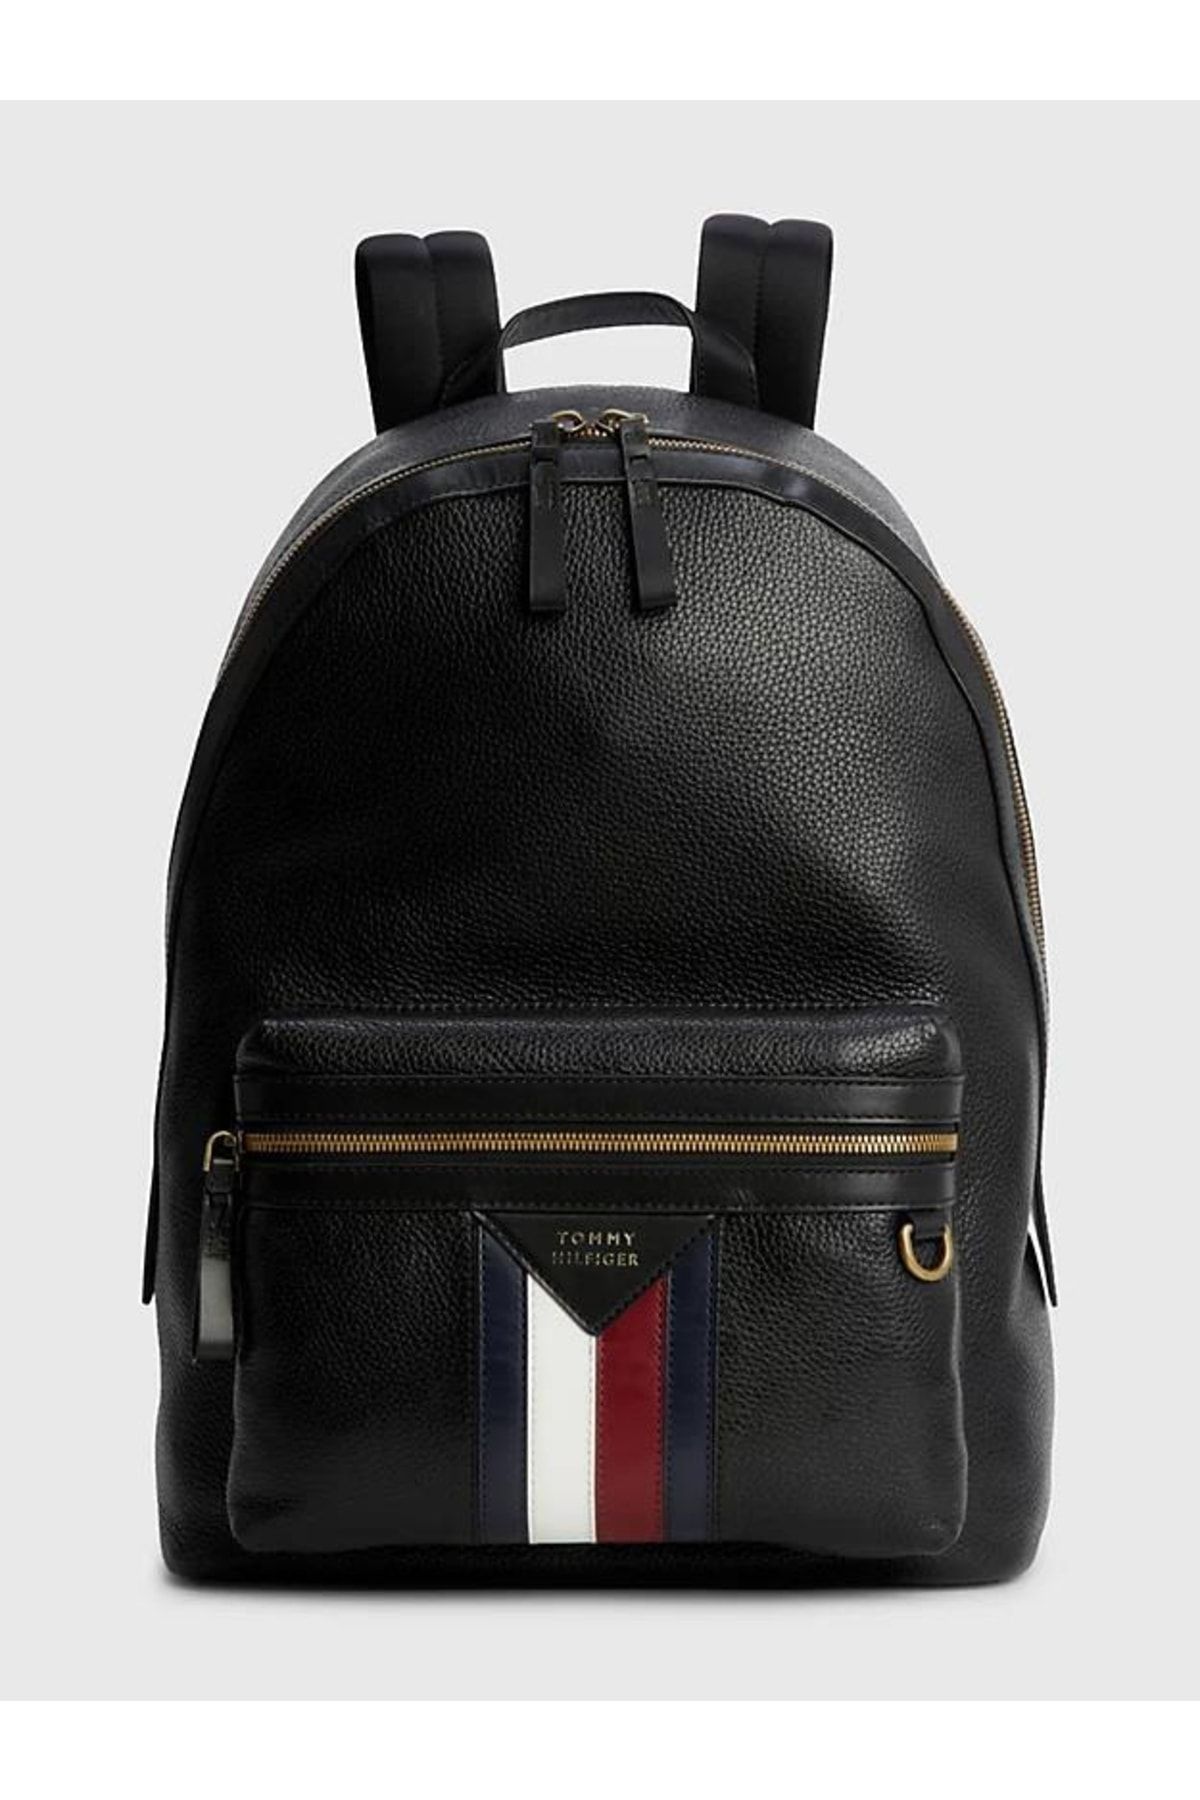 Tommy Hilfiger Th Premıum Leather Backpack